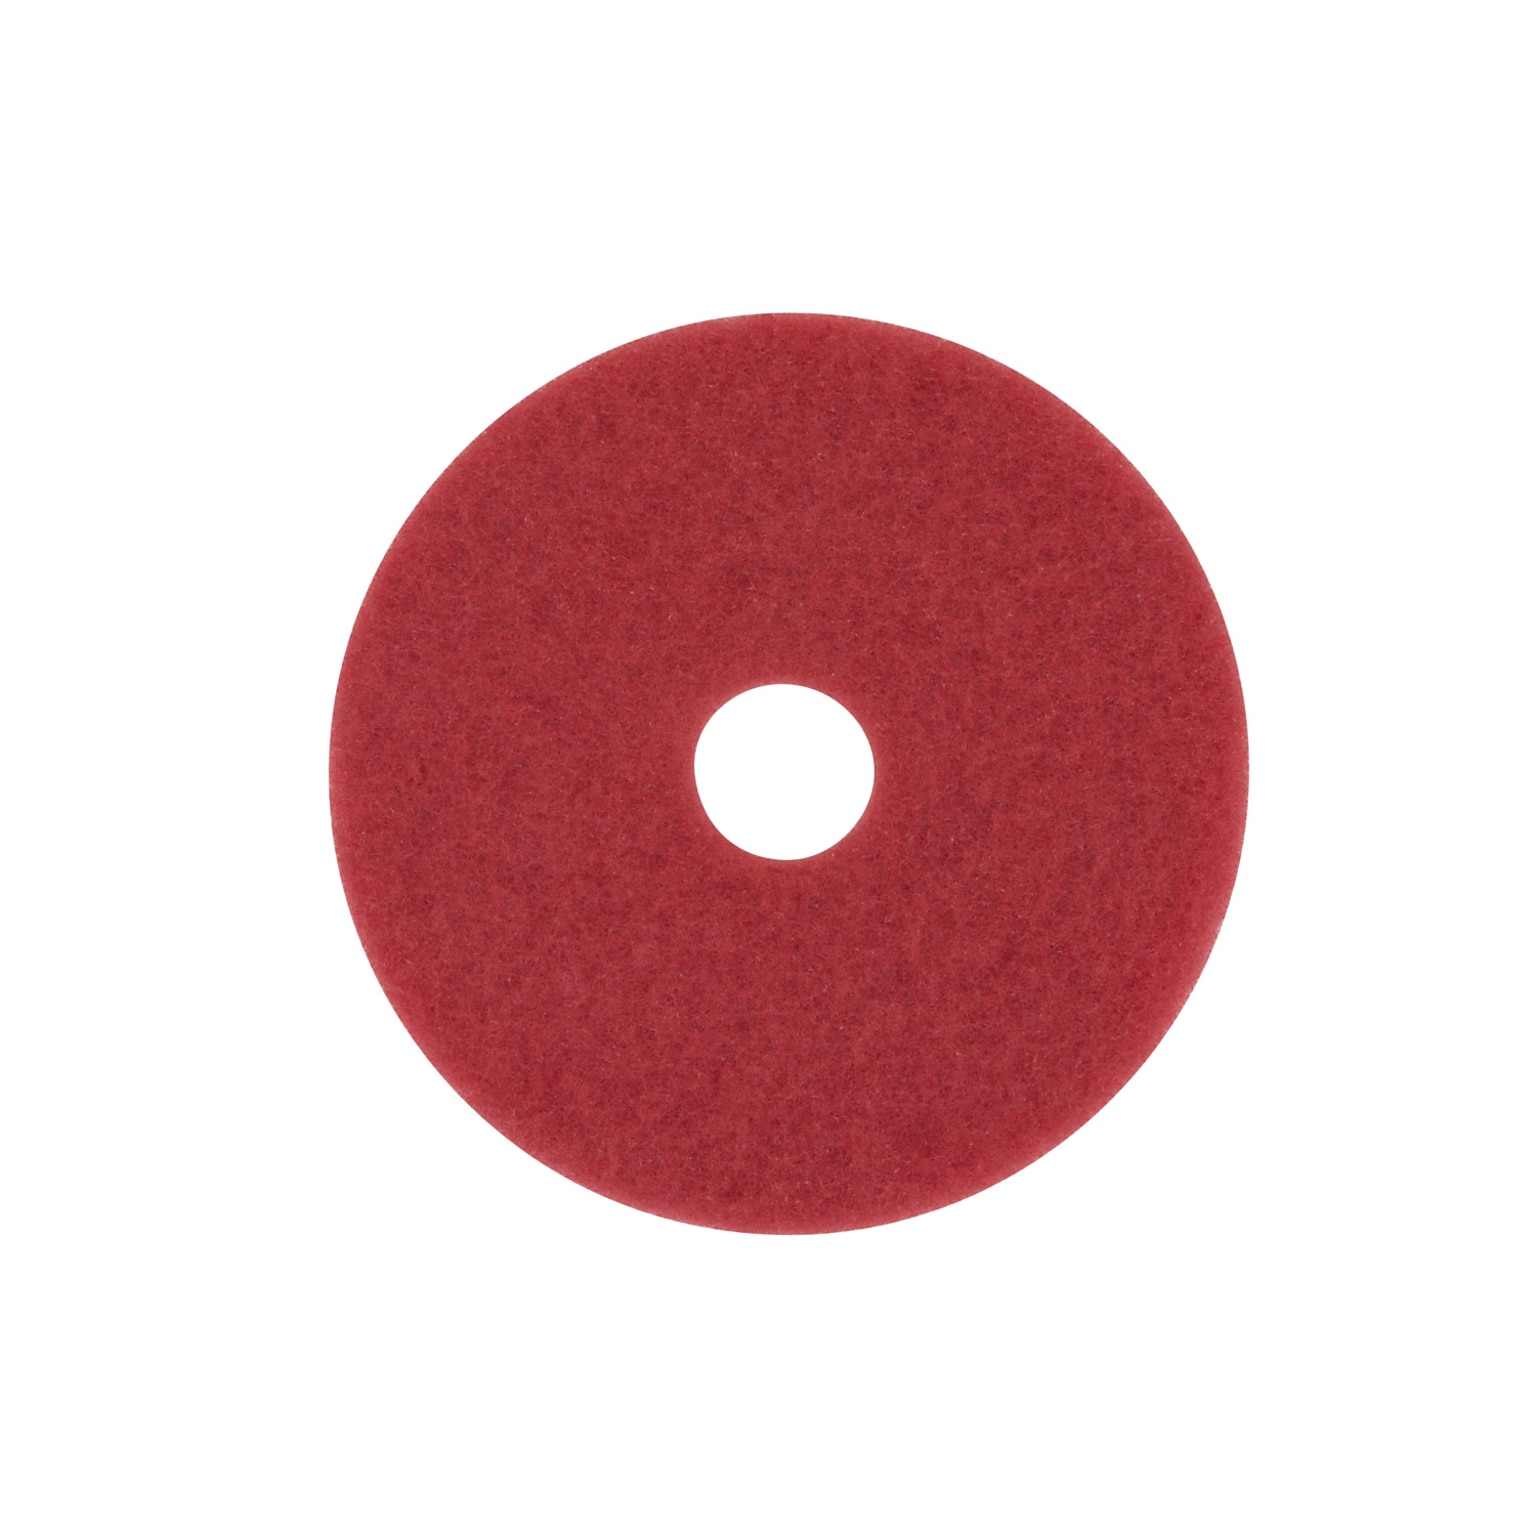 3M 19 Burnish Floor Pad, Red, 5/Carton (510019)